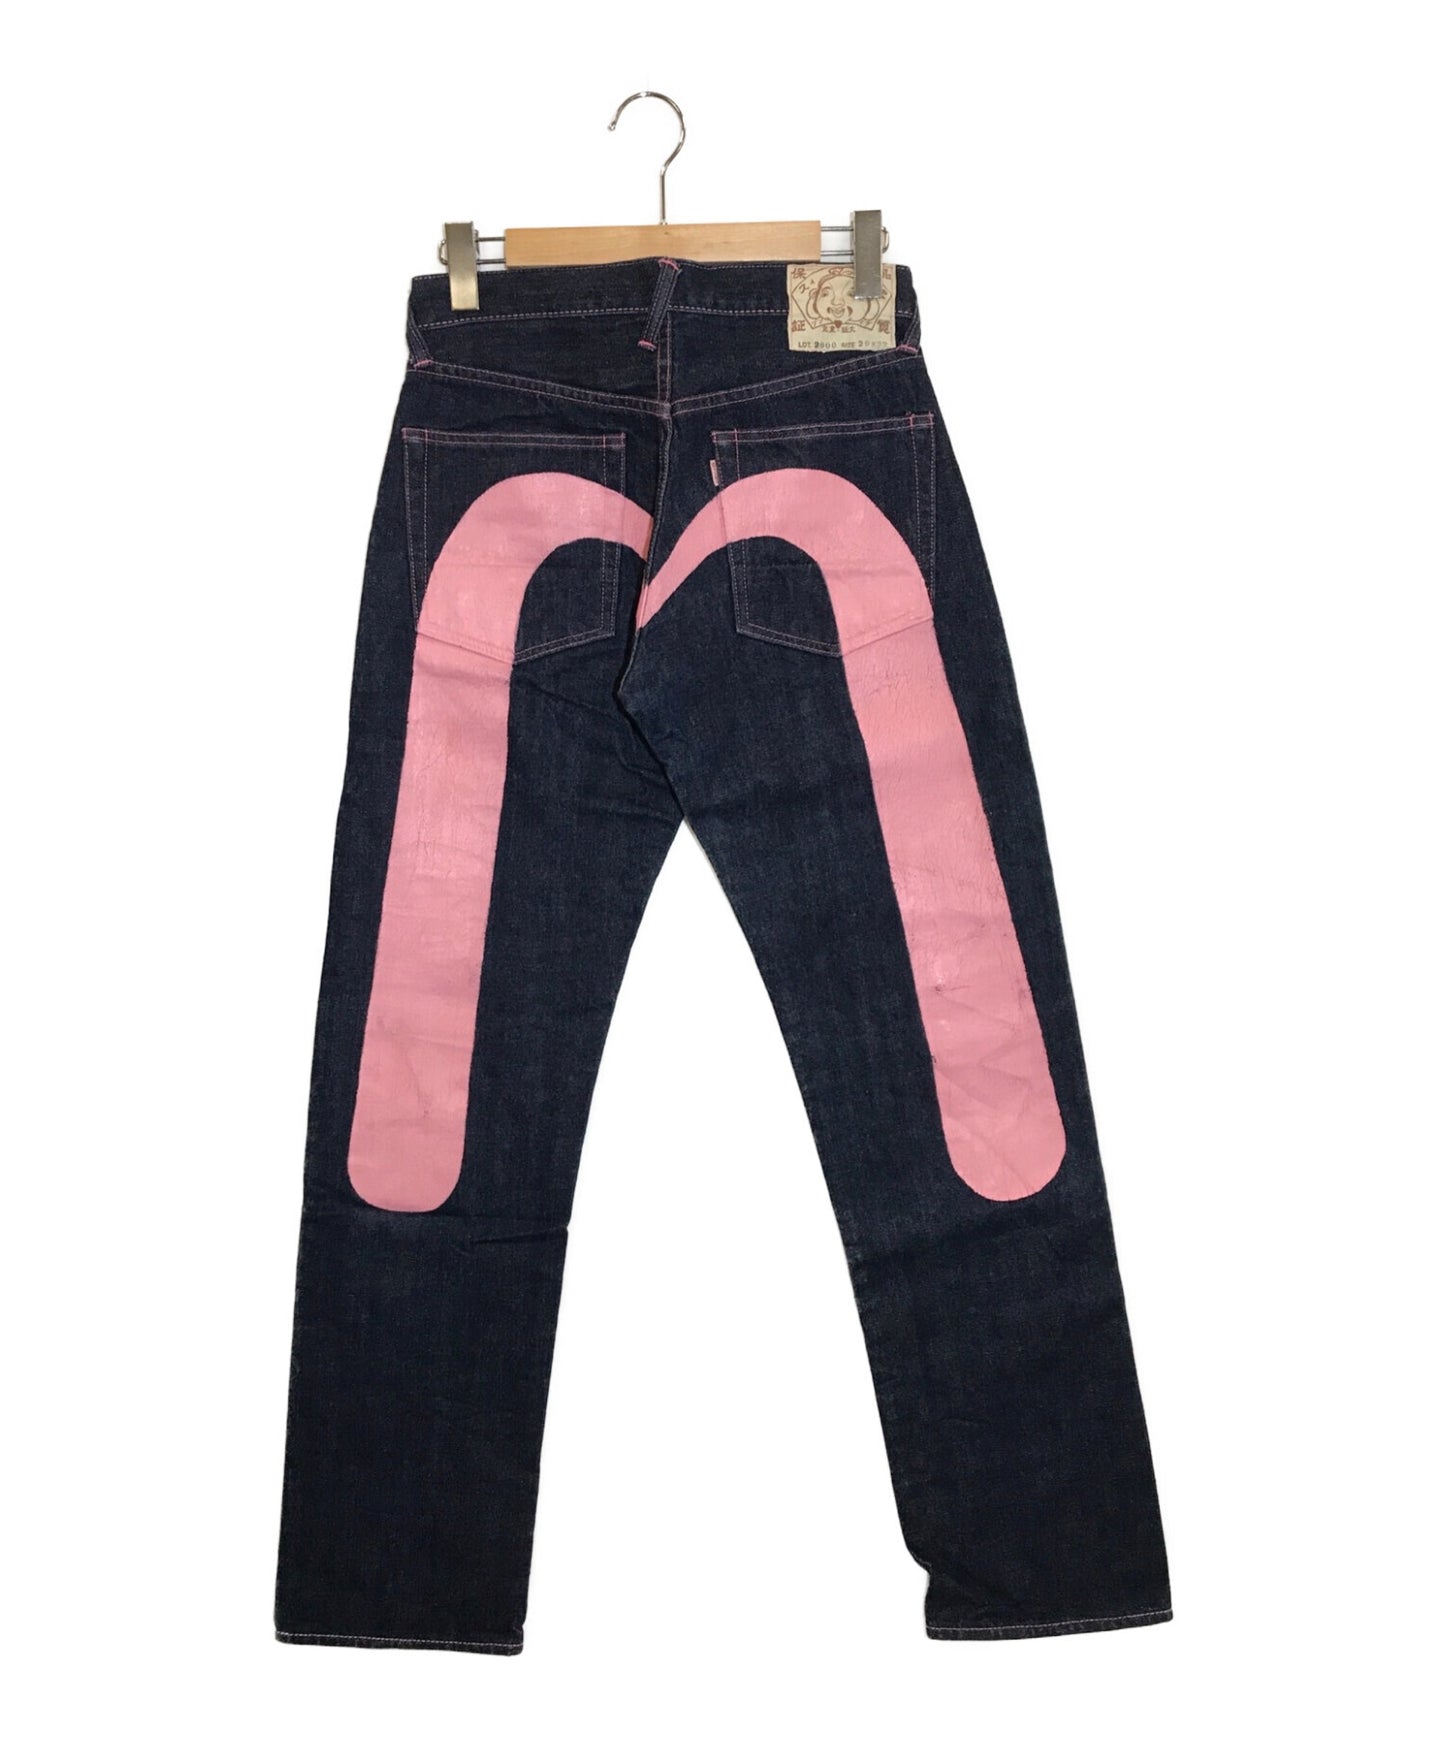 世界有名な EVISU PLAY Jeans BOY Logo / No.2 denim pants Custom